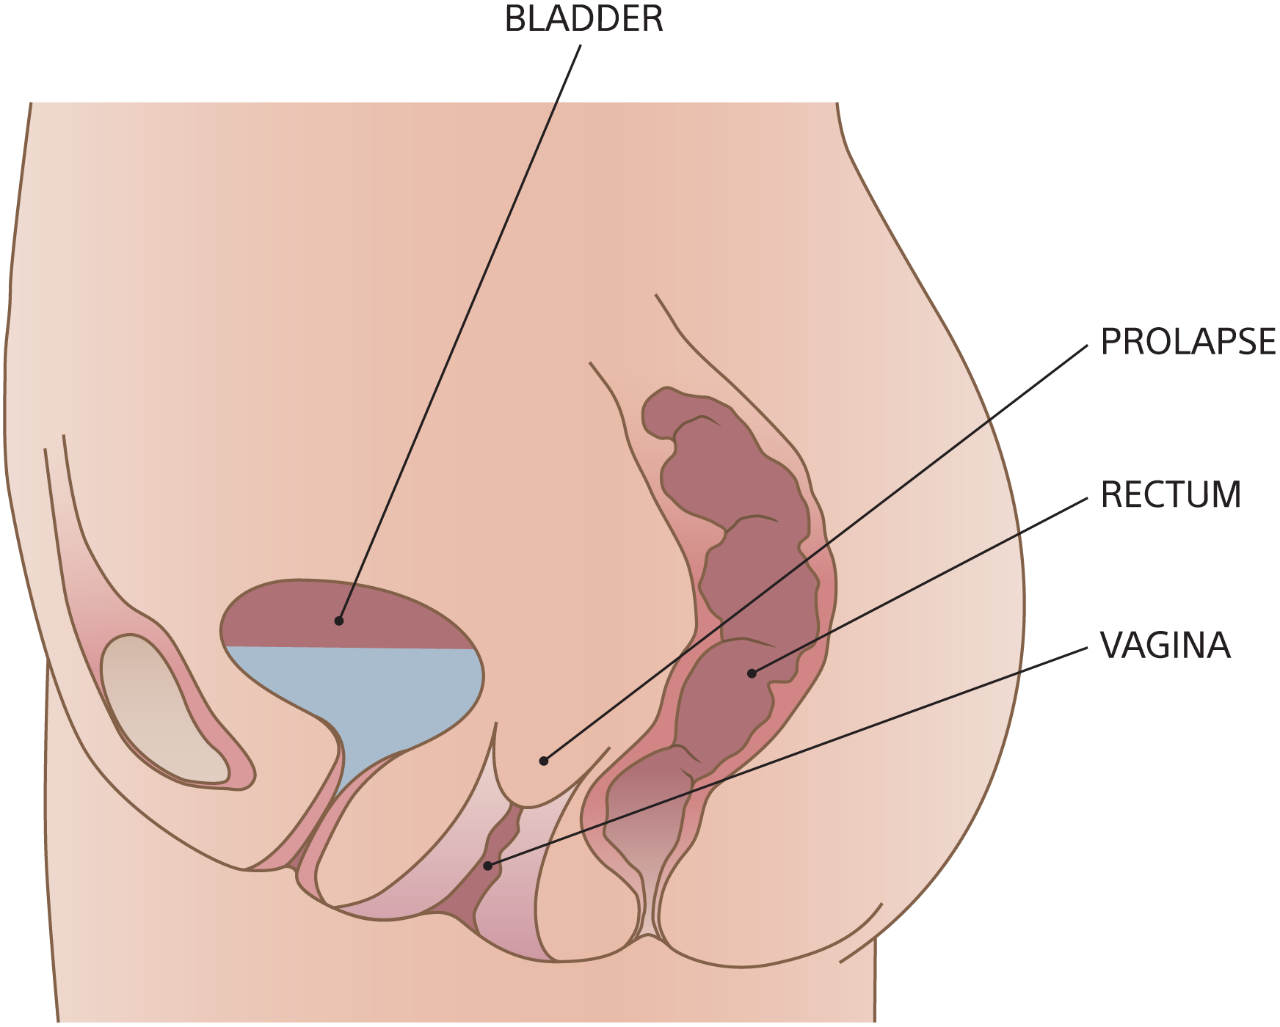 Diagram of vaginal vault prolapse with bladder, rectum, vagina, and prolapse.